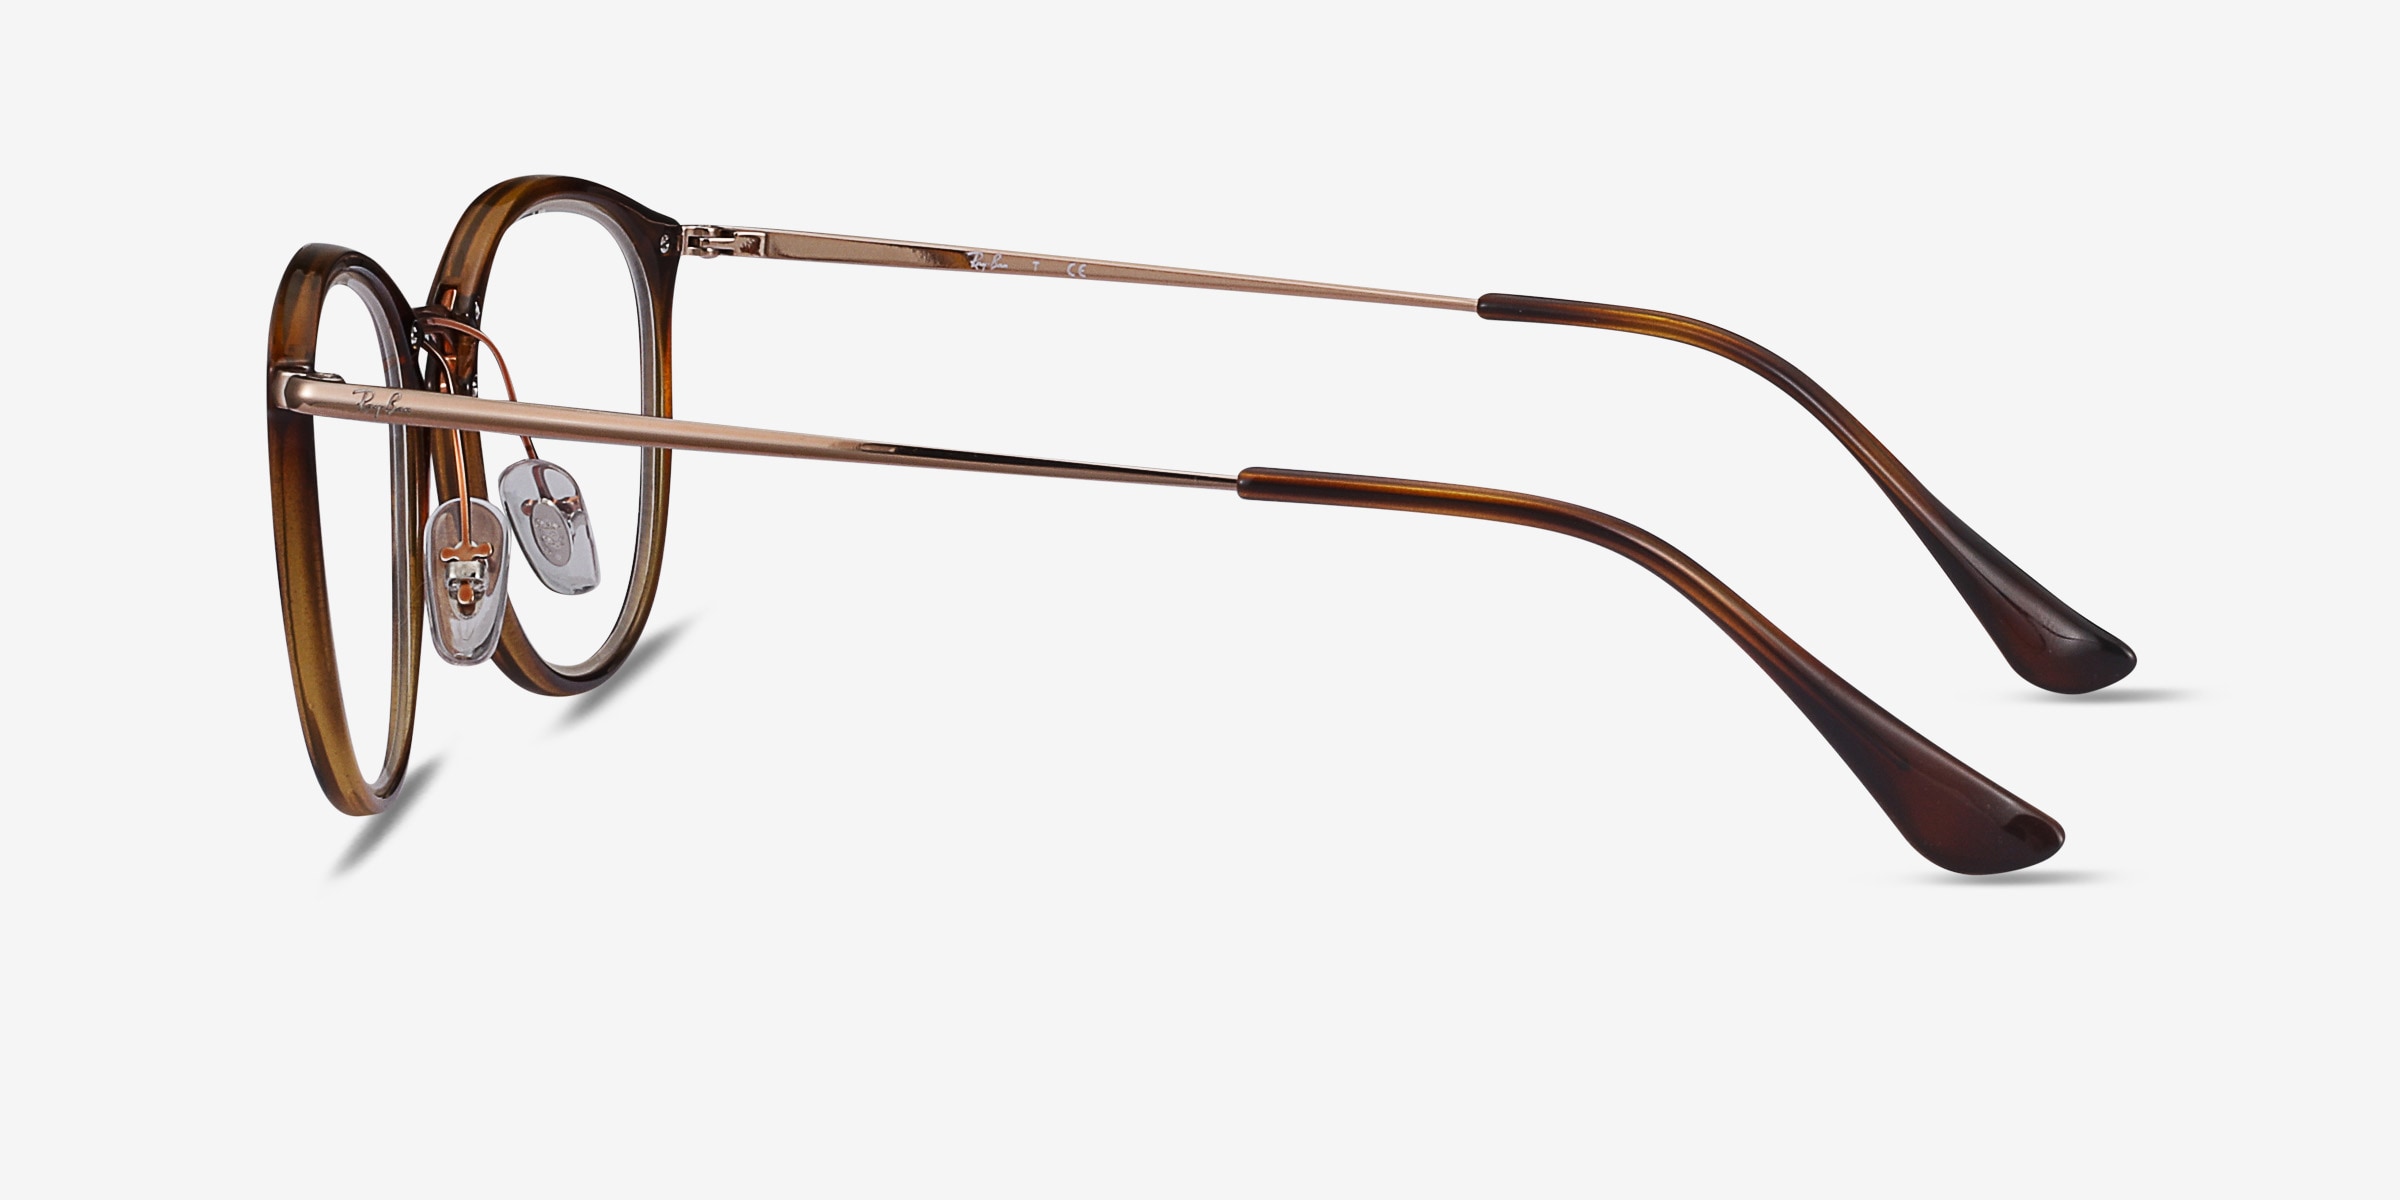 Ray-Ban RB7140 - Round Tortoise Bronze Frame Glasses For Women 